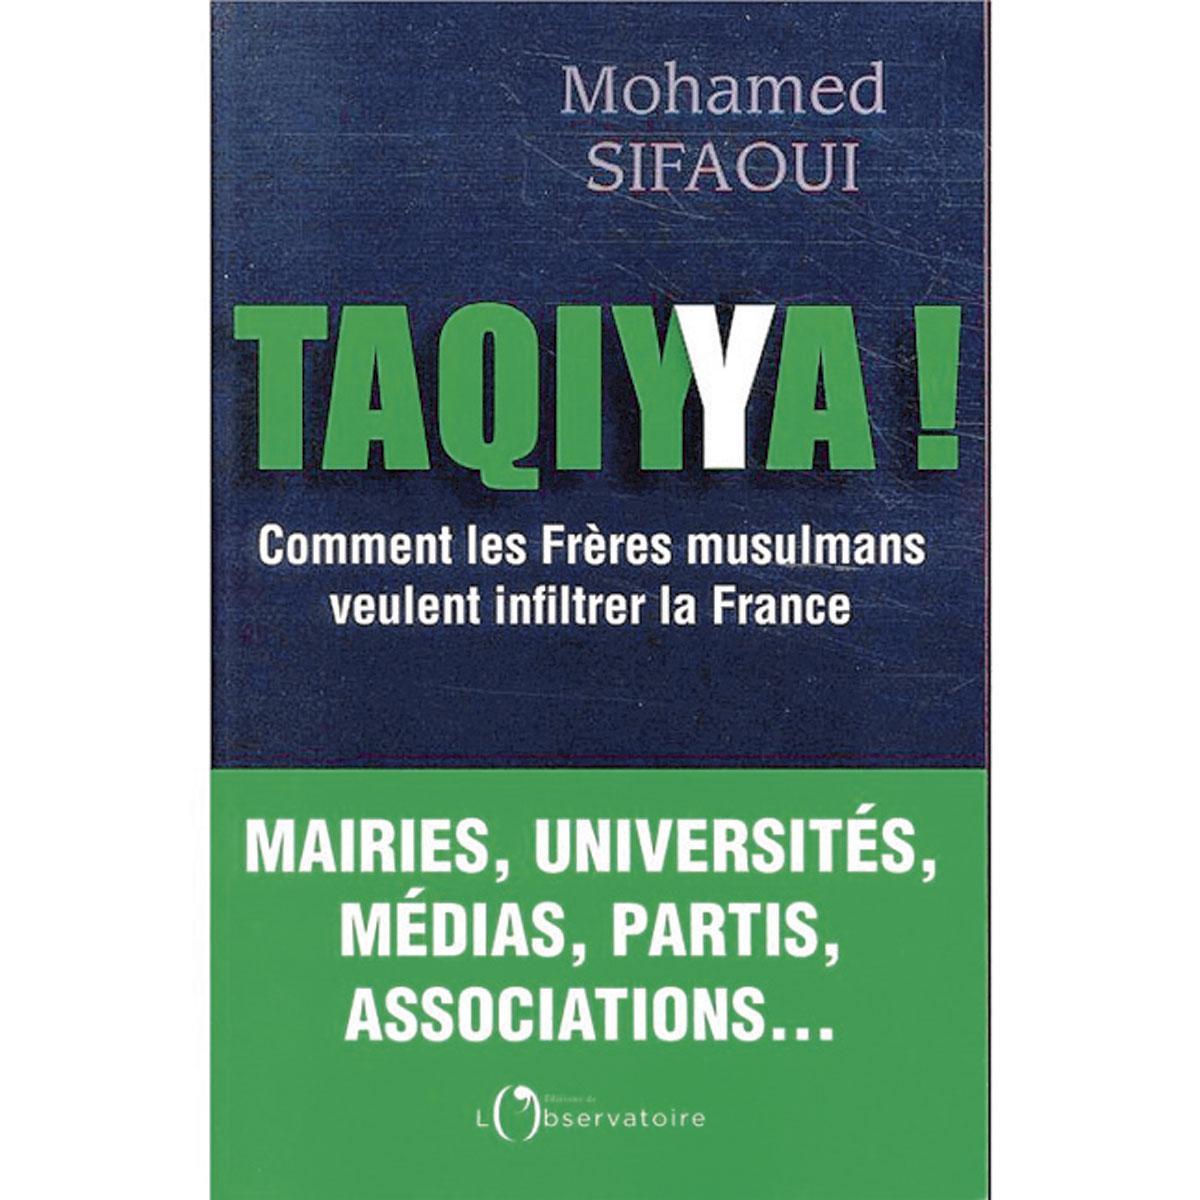 (1) Taqiyya ! Comment les Frères musulmans veulent infiltrer la France, par Mohamed Sifaoui, L'Observatoire, 2019, 416 p.